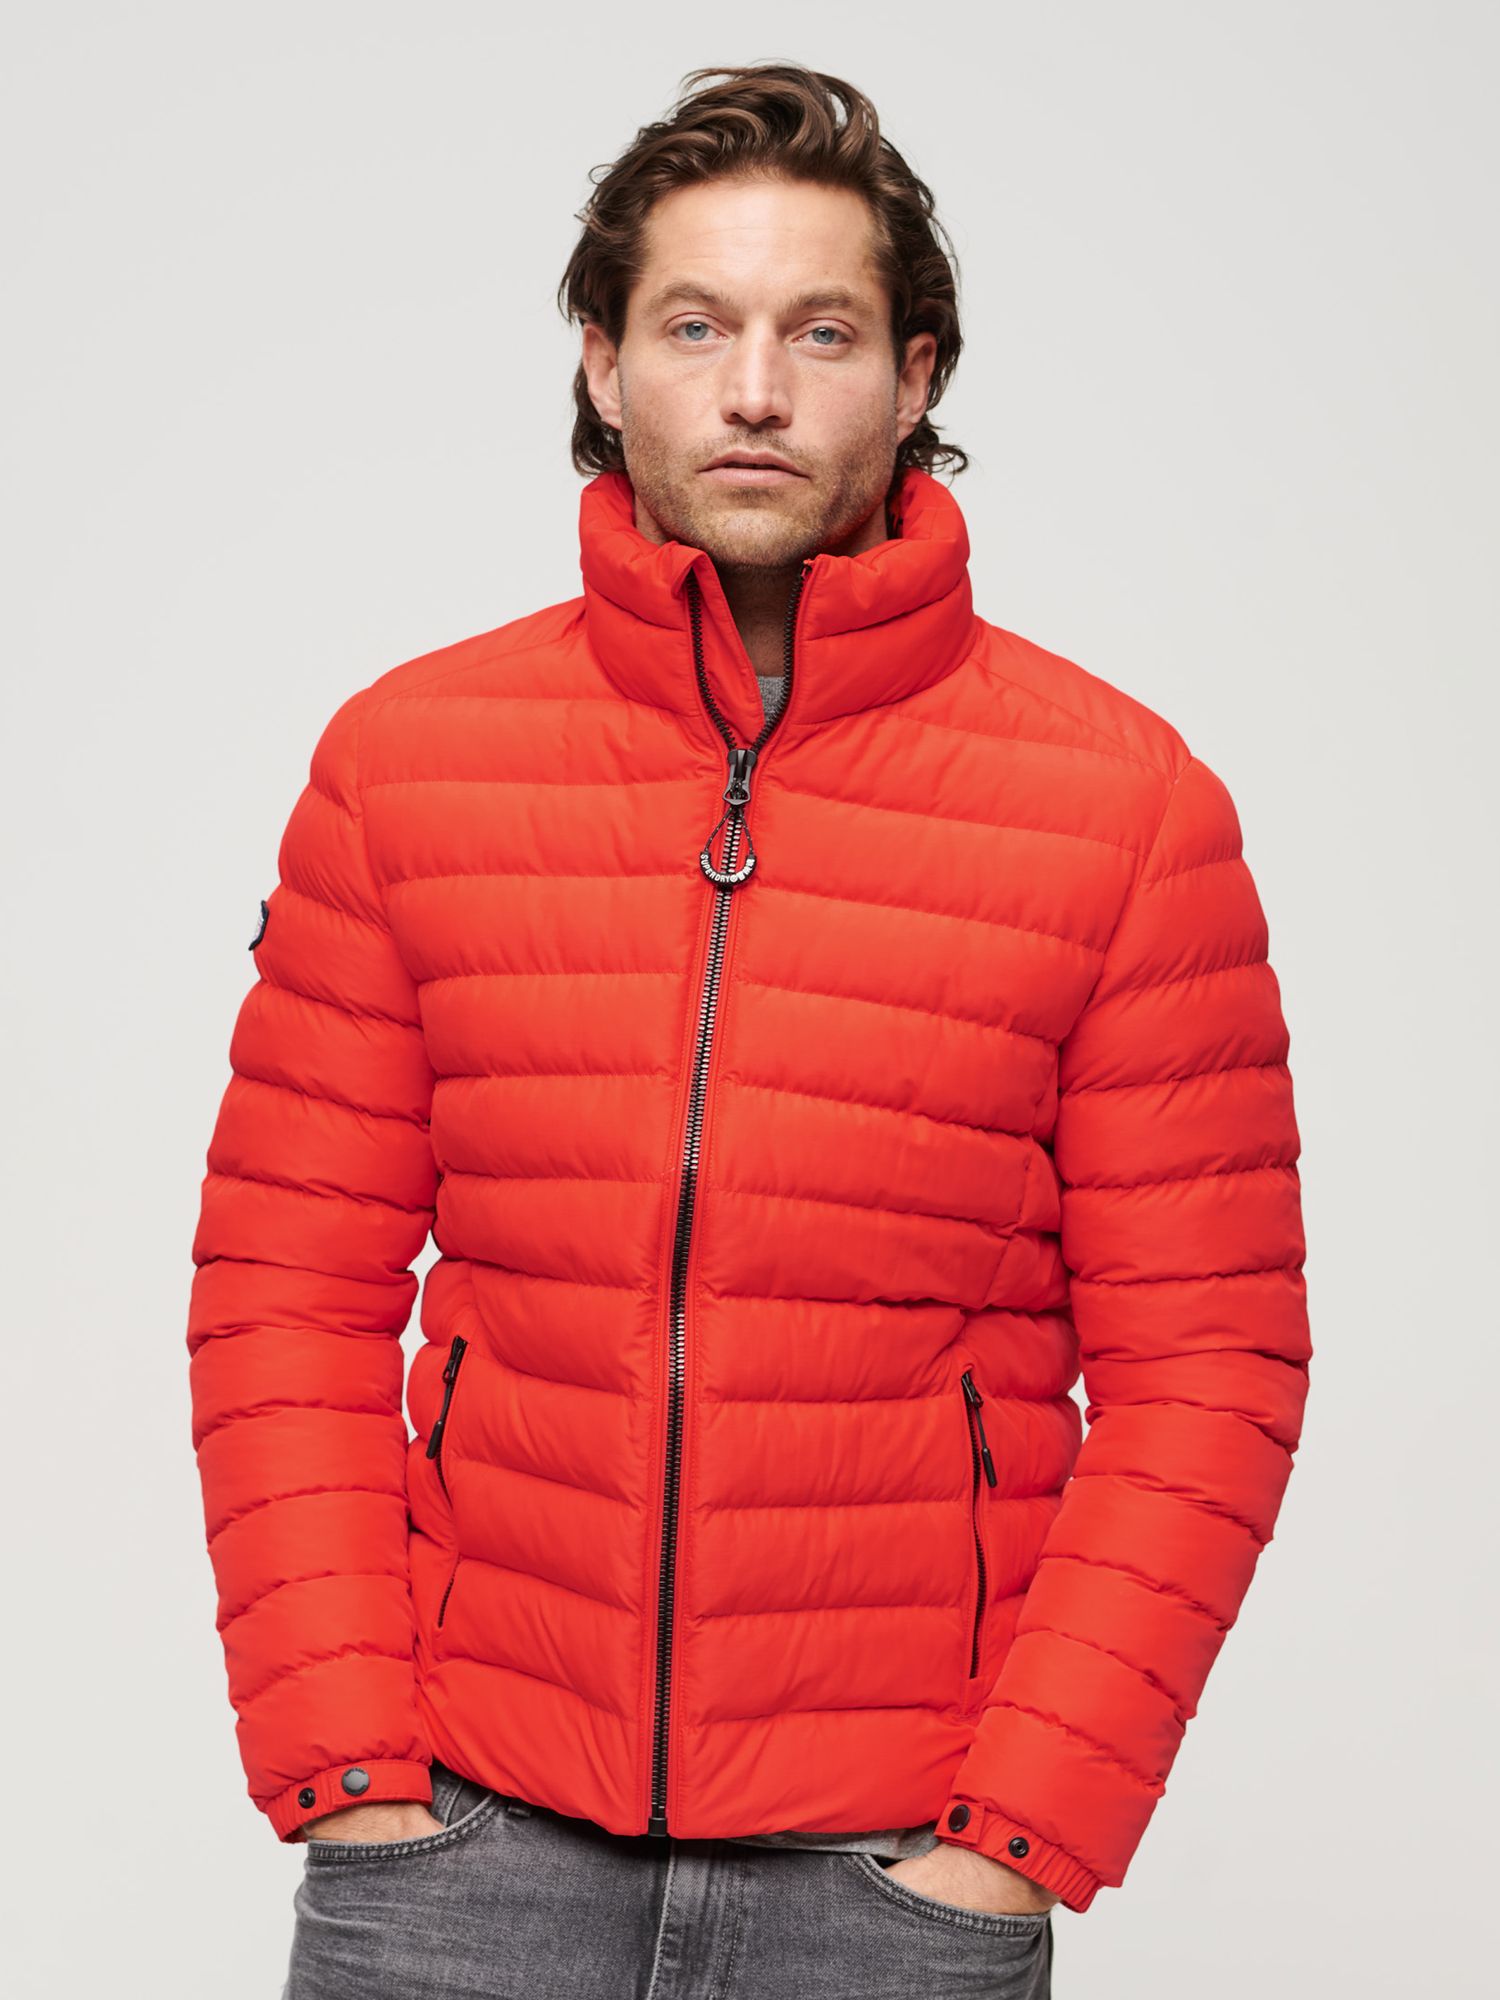 Superdry Fuji Printed Padded Jacket, Sunset Red at John Lewis & Partners